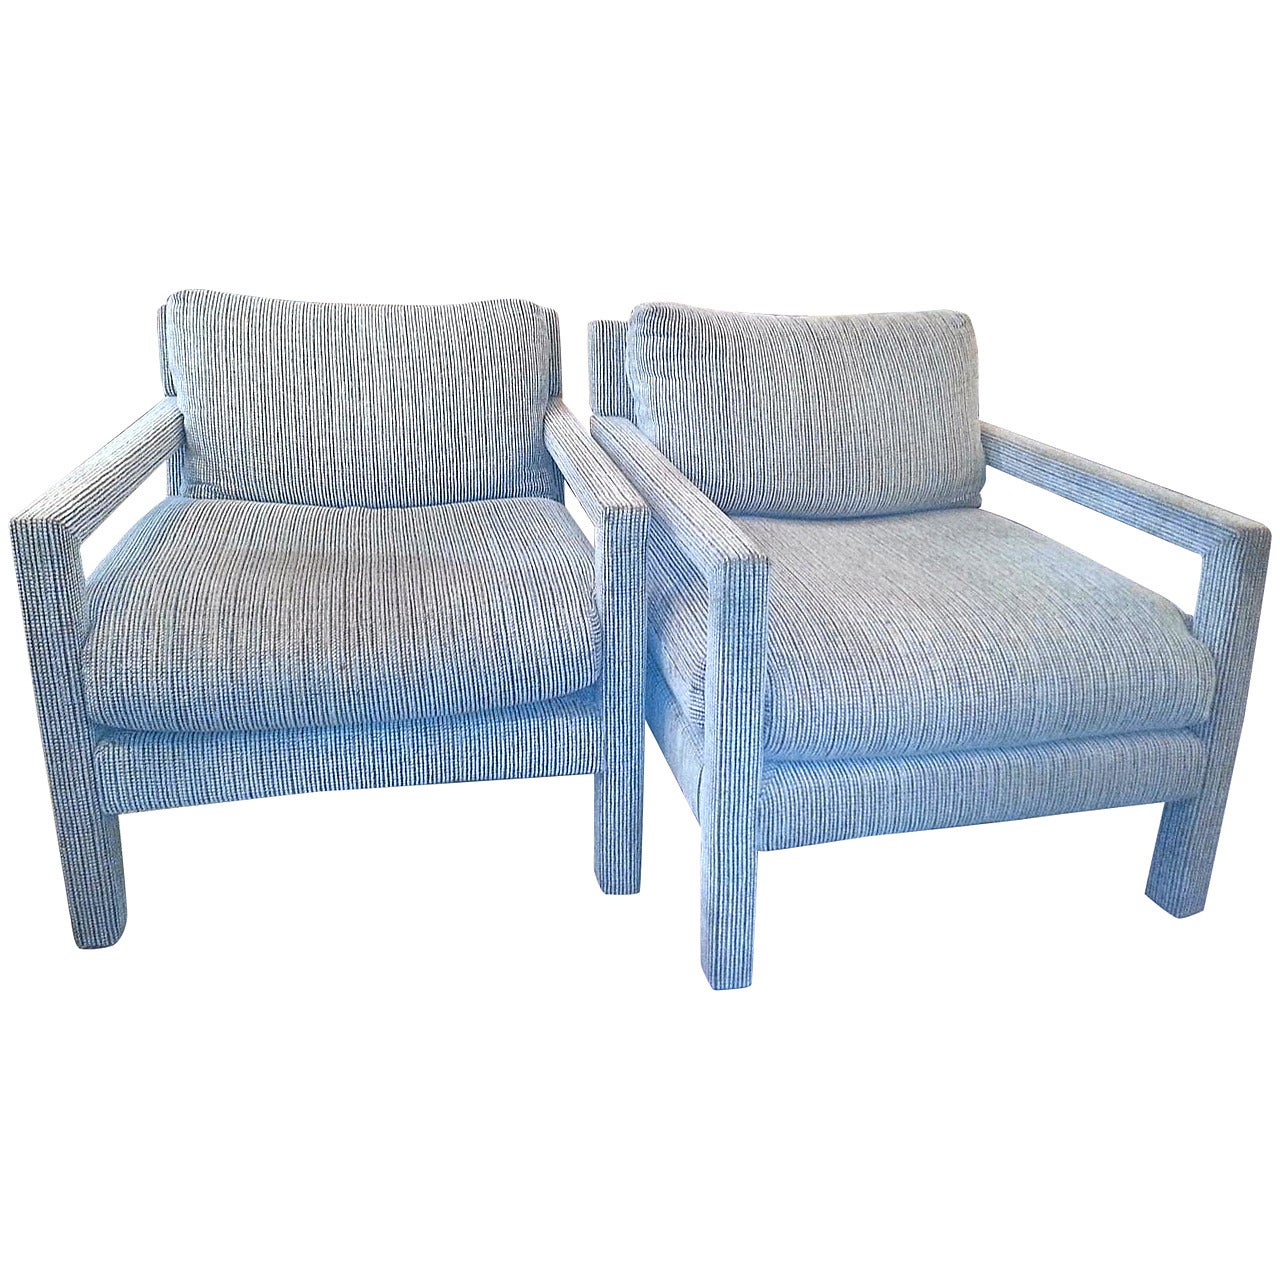 Pair of Mid Century Modern Milo Baughman Style Lounge Chairs